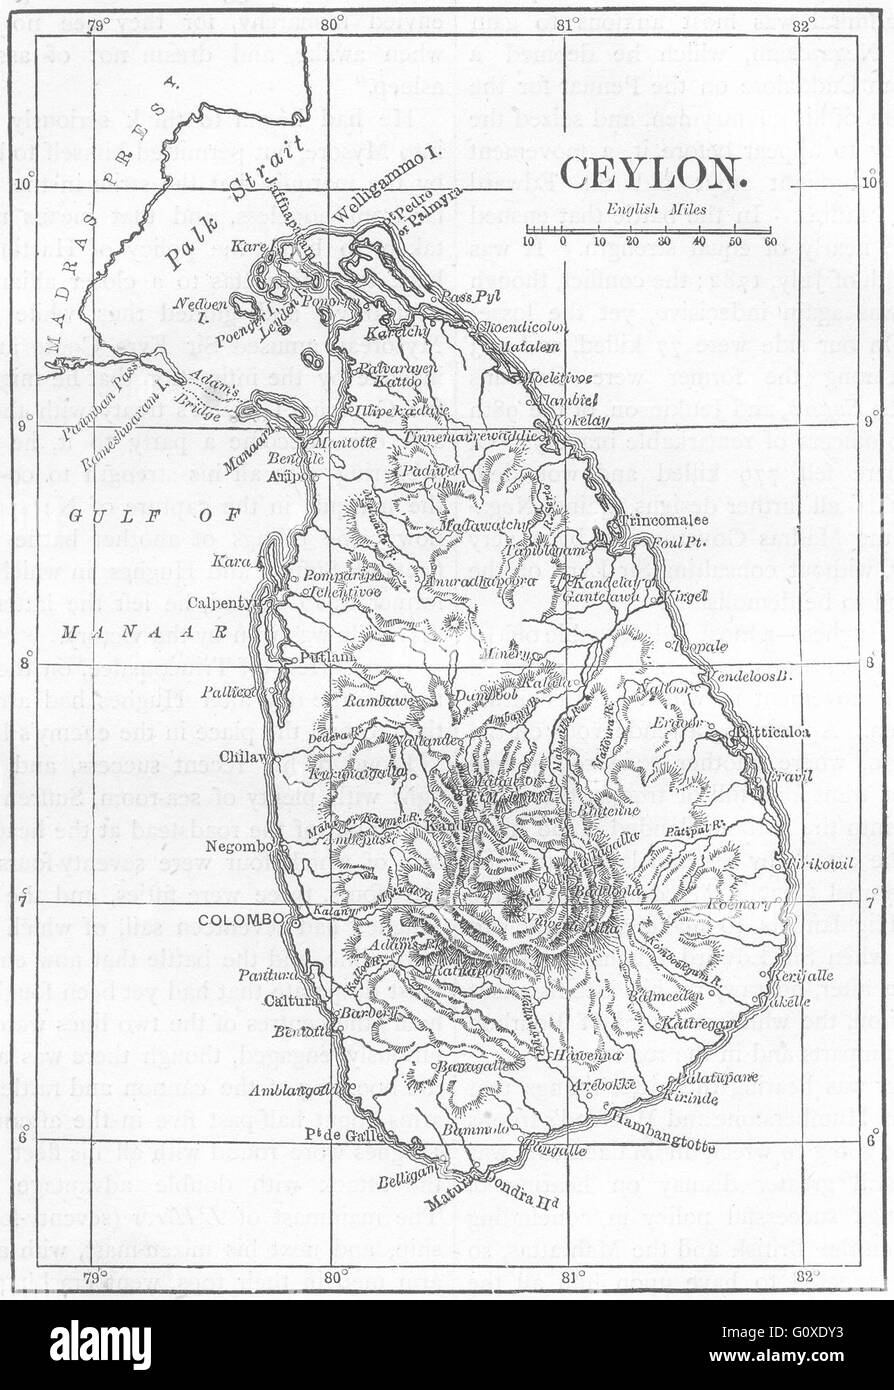 SRI LANKA: Map of Sri Lanka, c1880 Stock Photo